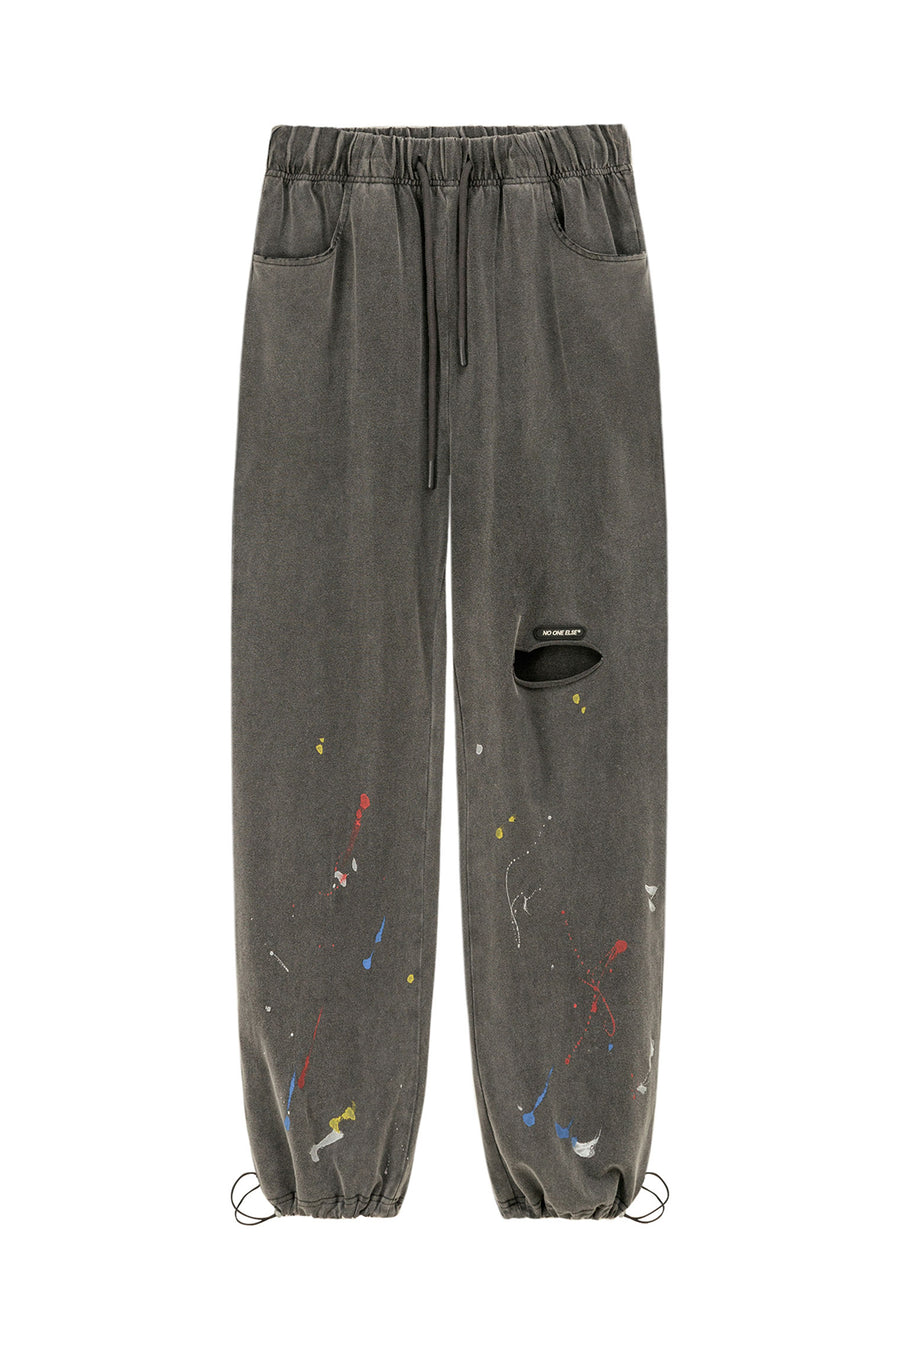 CHUU Street Style Paint Spots Slit String Pants